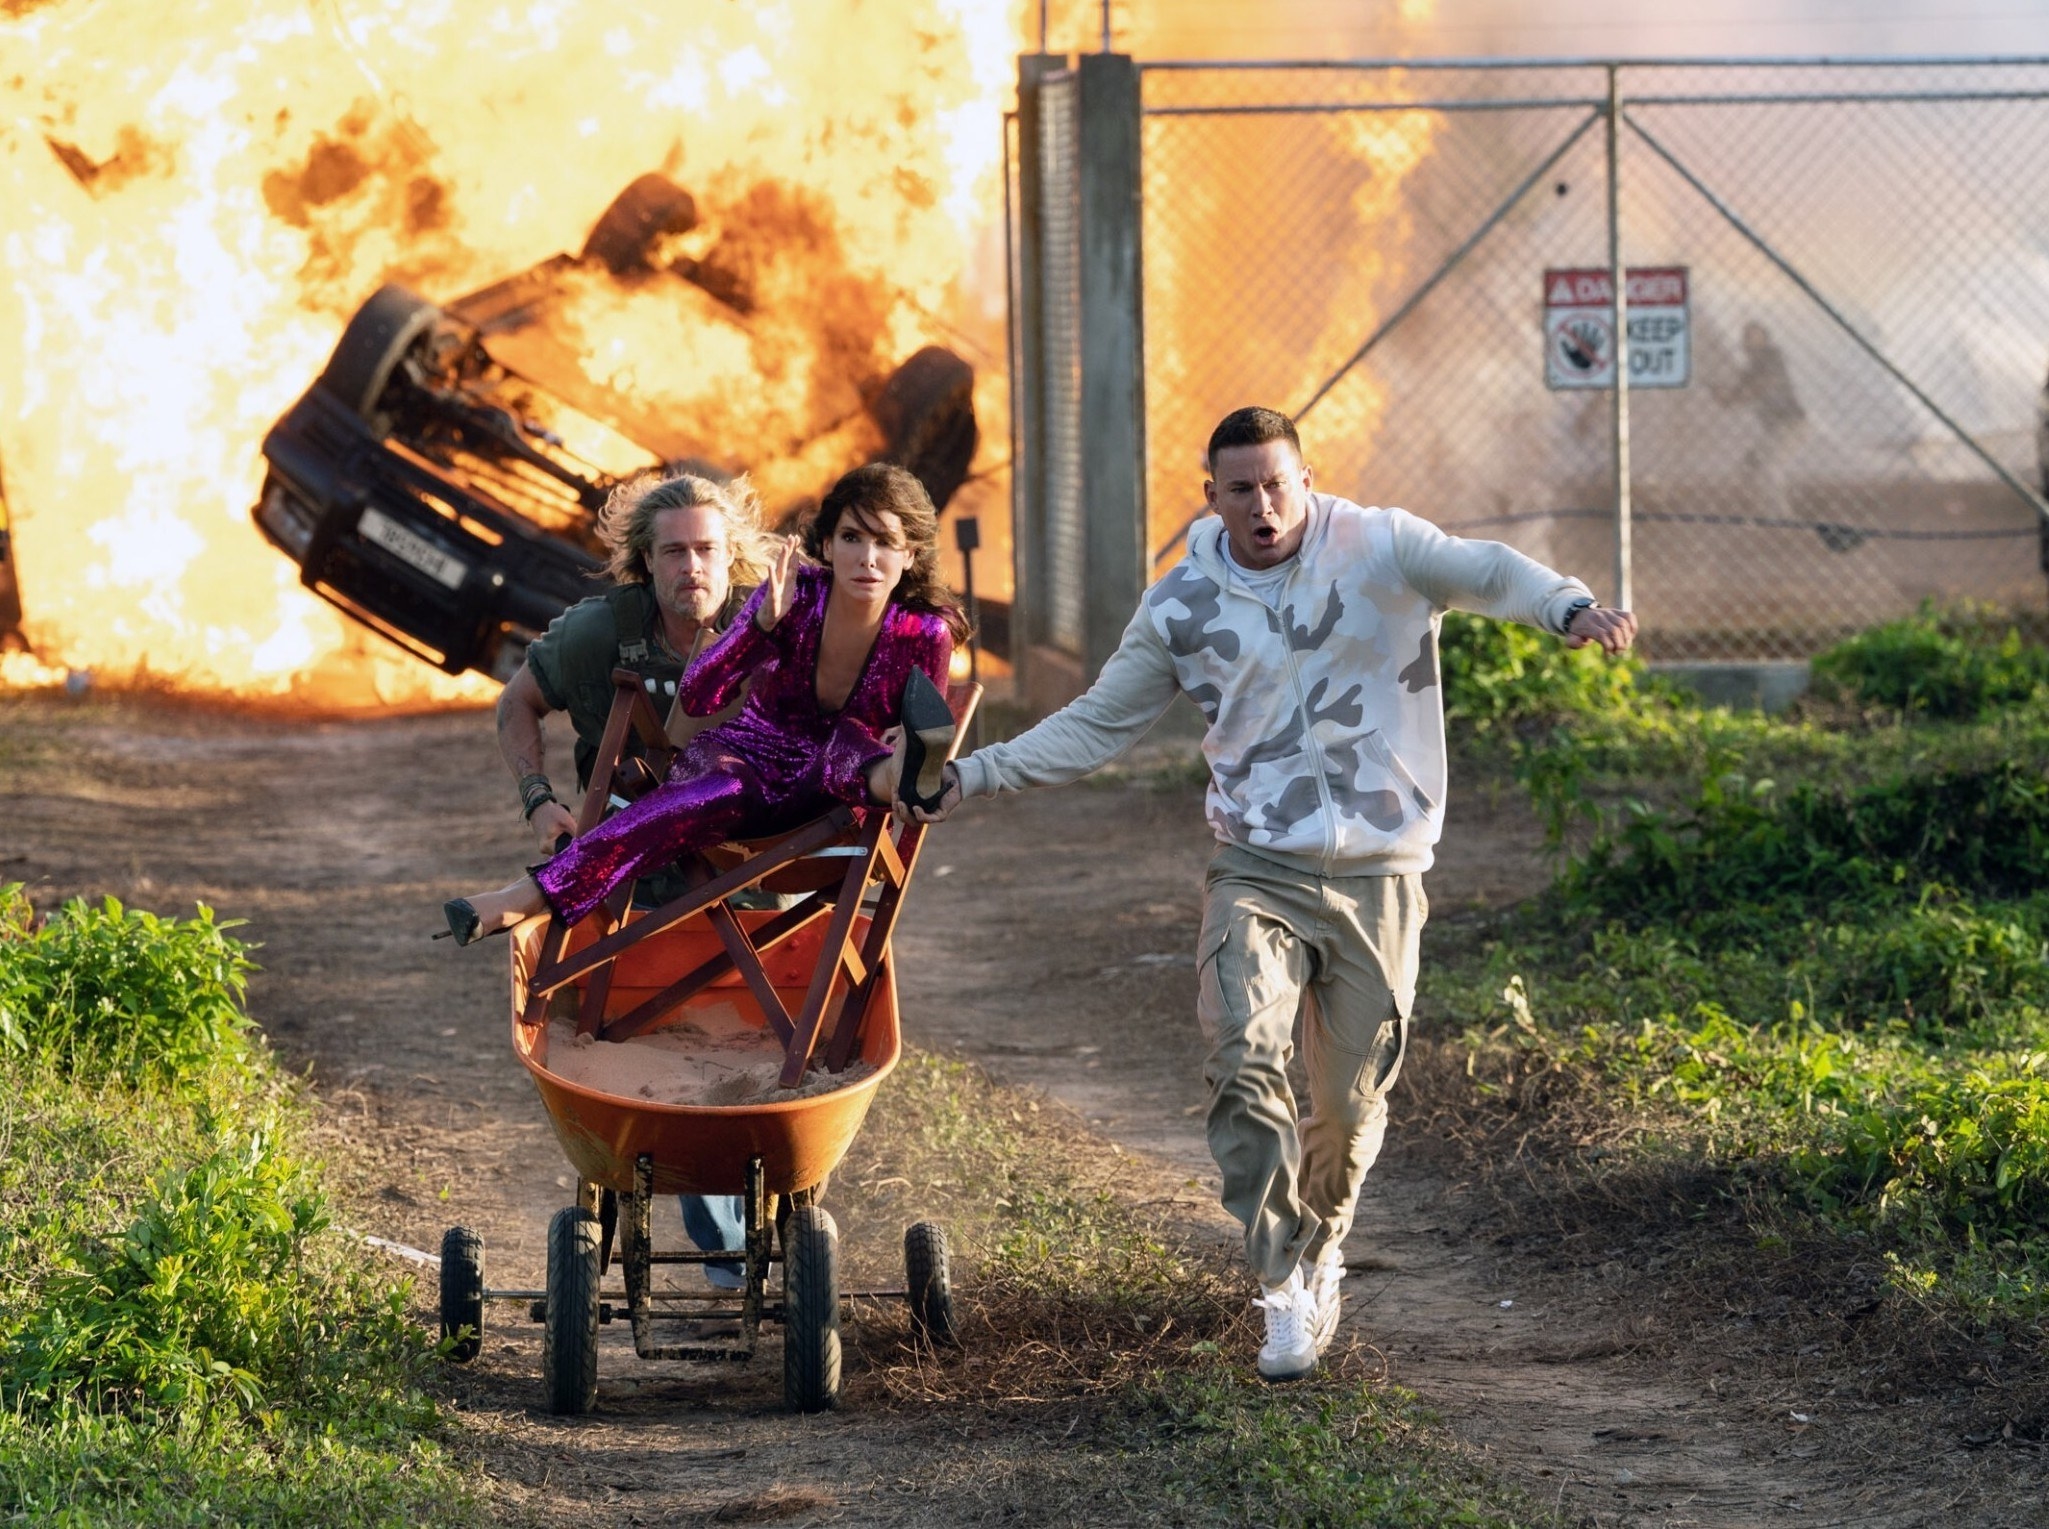 Brad Pitt, Sandra Bullock, and Channing Tatum running from an explosion in The Lost City